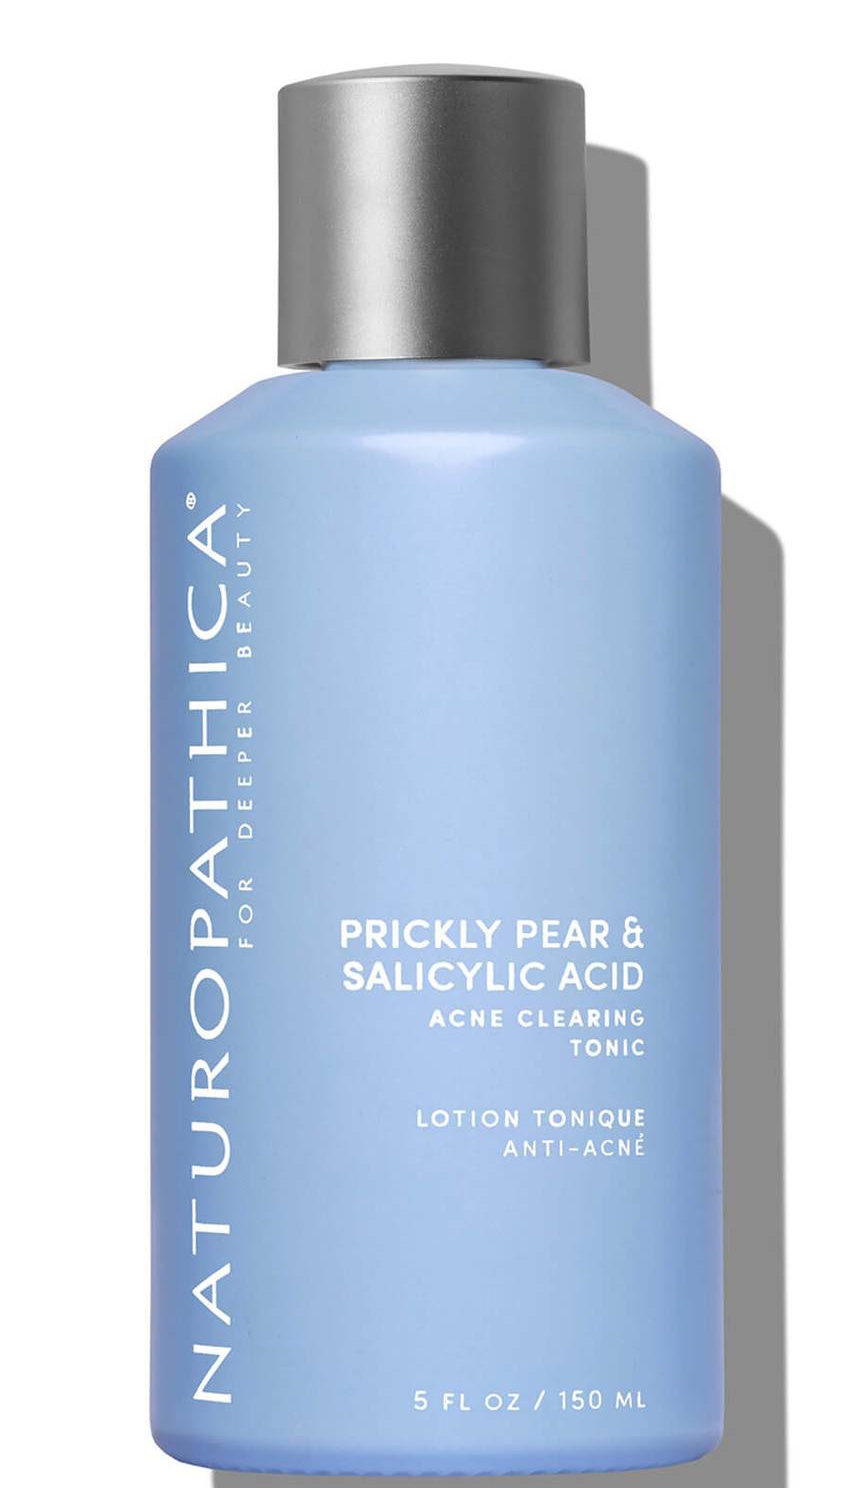 naturopathica Prickly Pear & Salicylic Acid Tonic